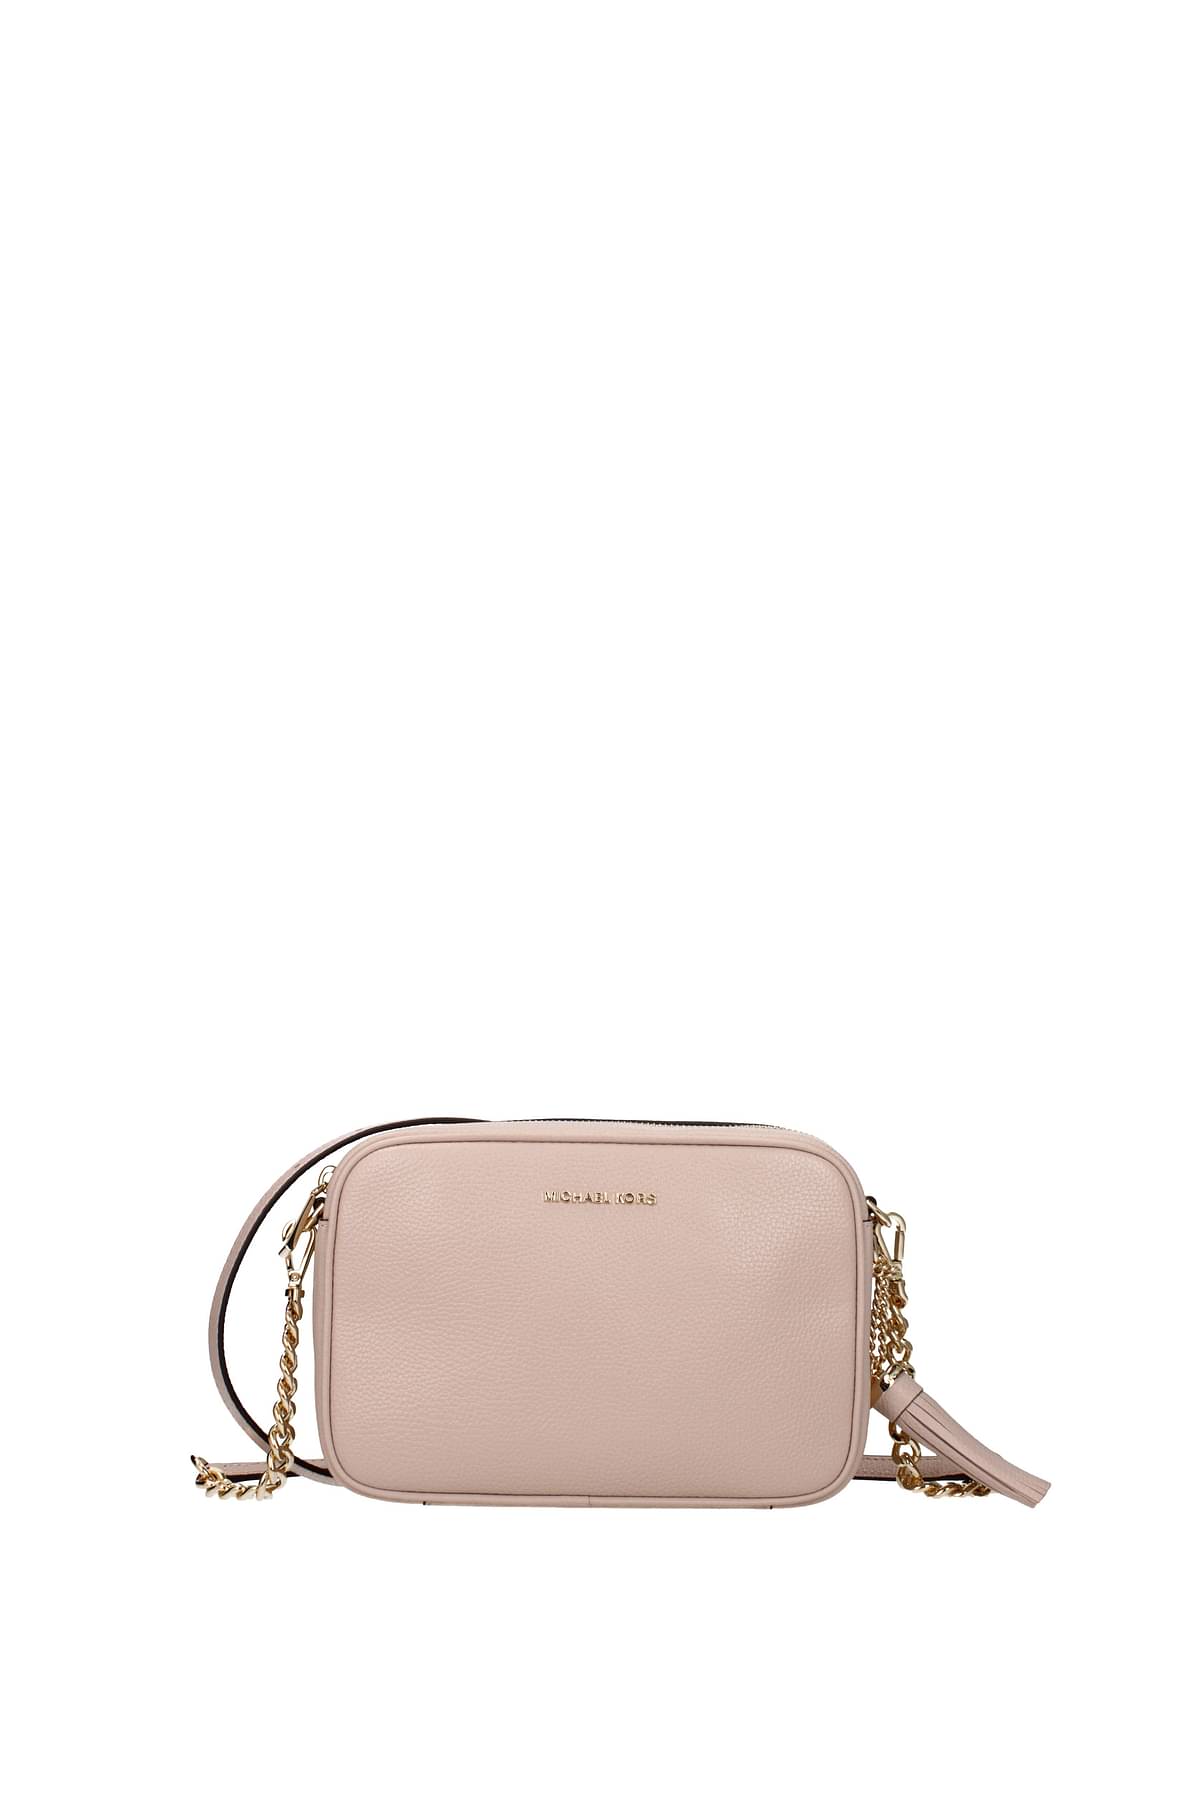 Michael Kors Ginny Ladies Small Soft Pink Leather Crossbody Bag  32F7GGNM8L187 